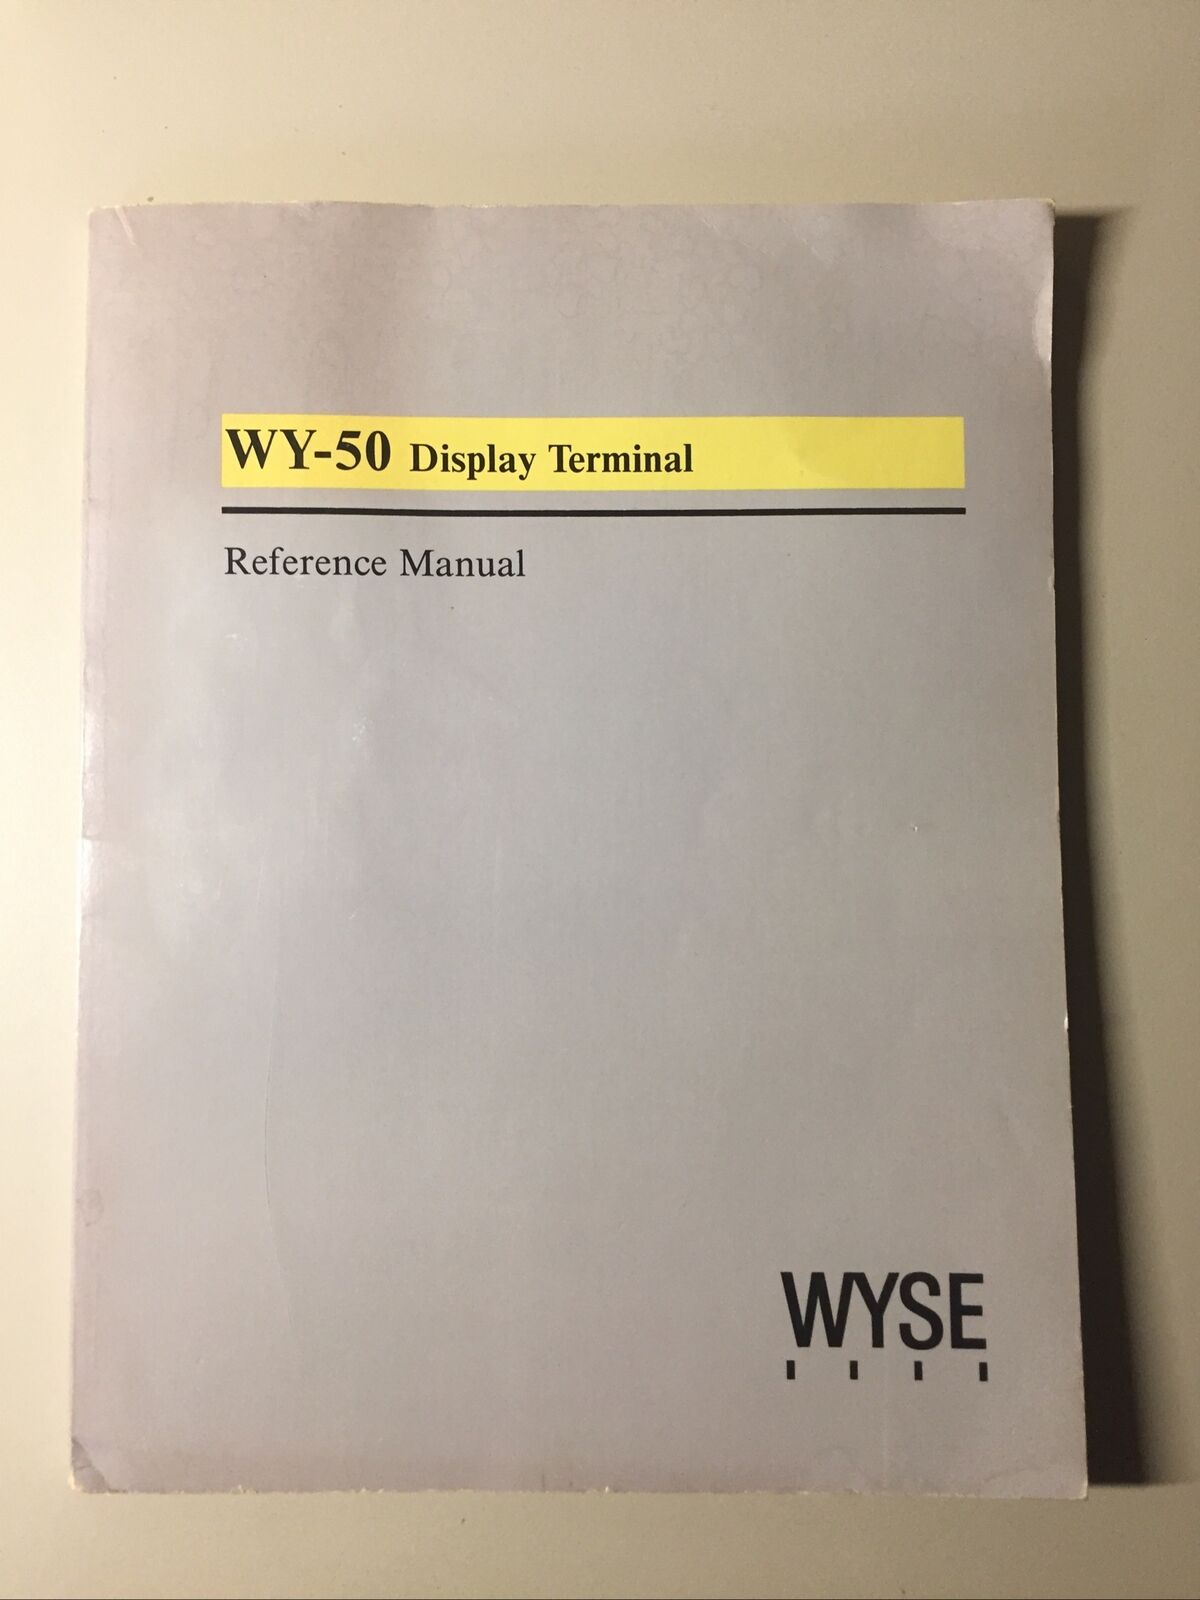 Vintage 1984 WYSE WY-50 Display Terminal Reference Manual